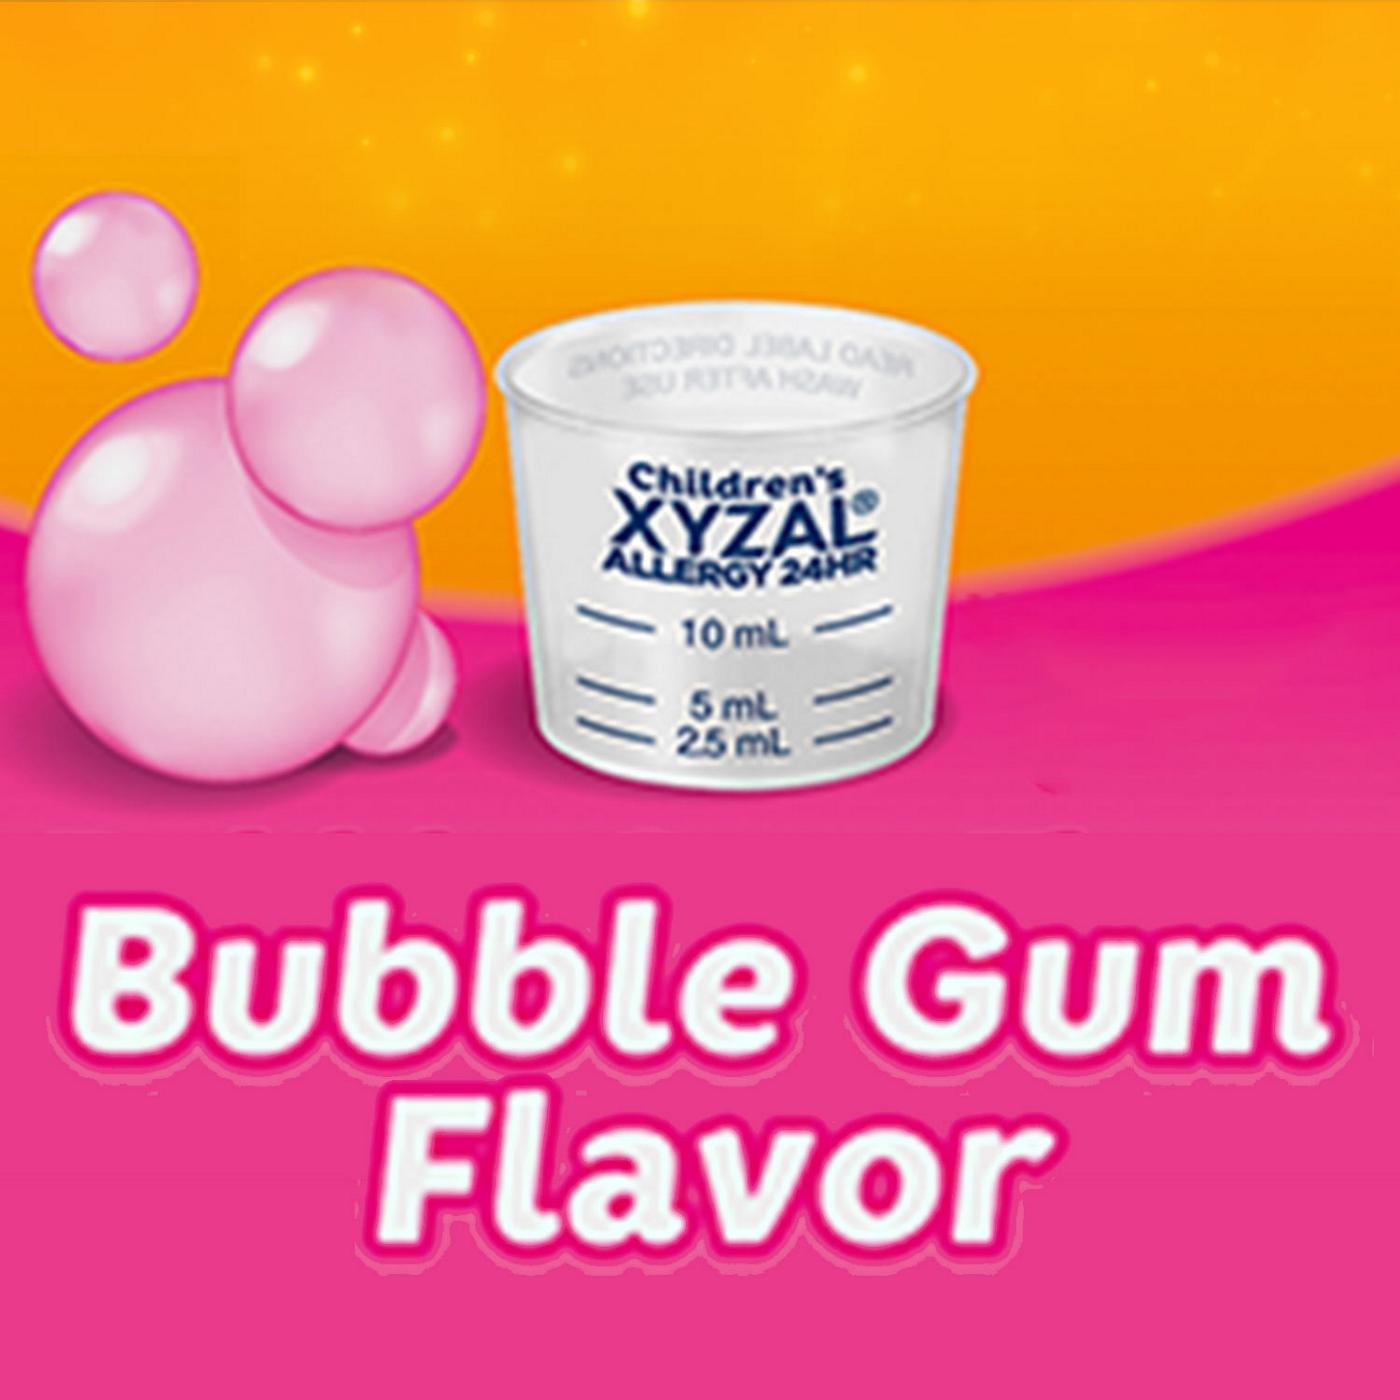 Xyzal Children's Allergy 24 Hour Relief Liquid - Bubble Gum; image 6 of 7